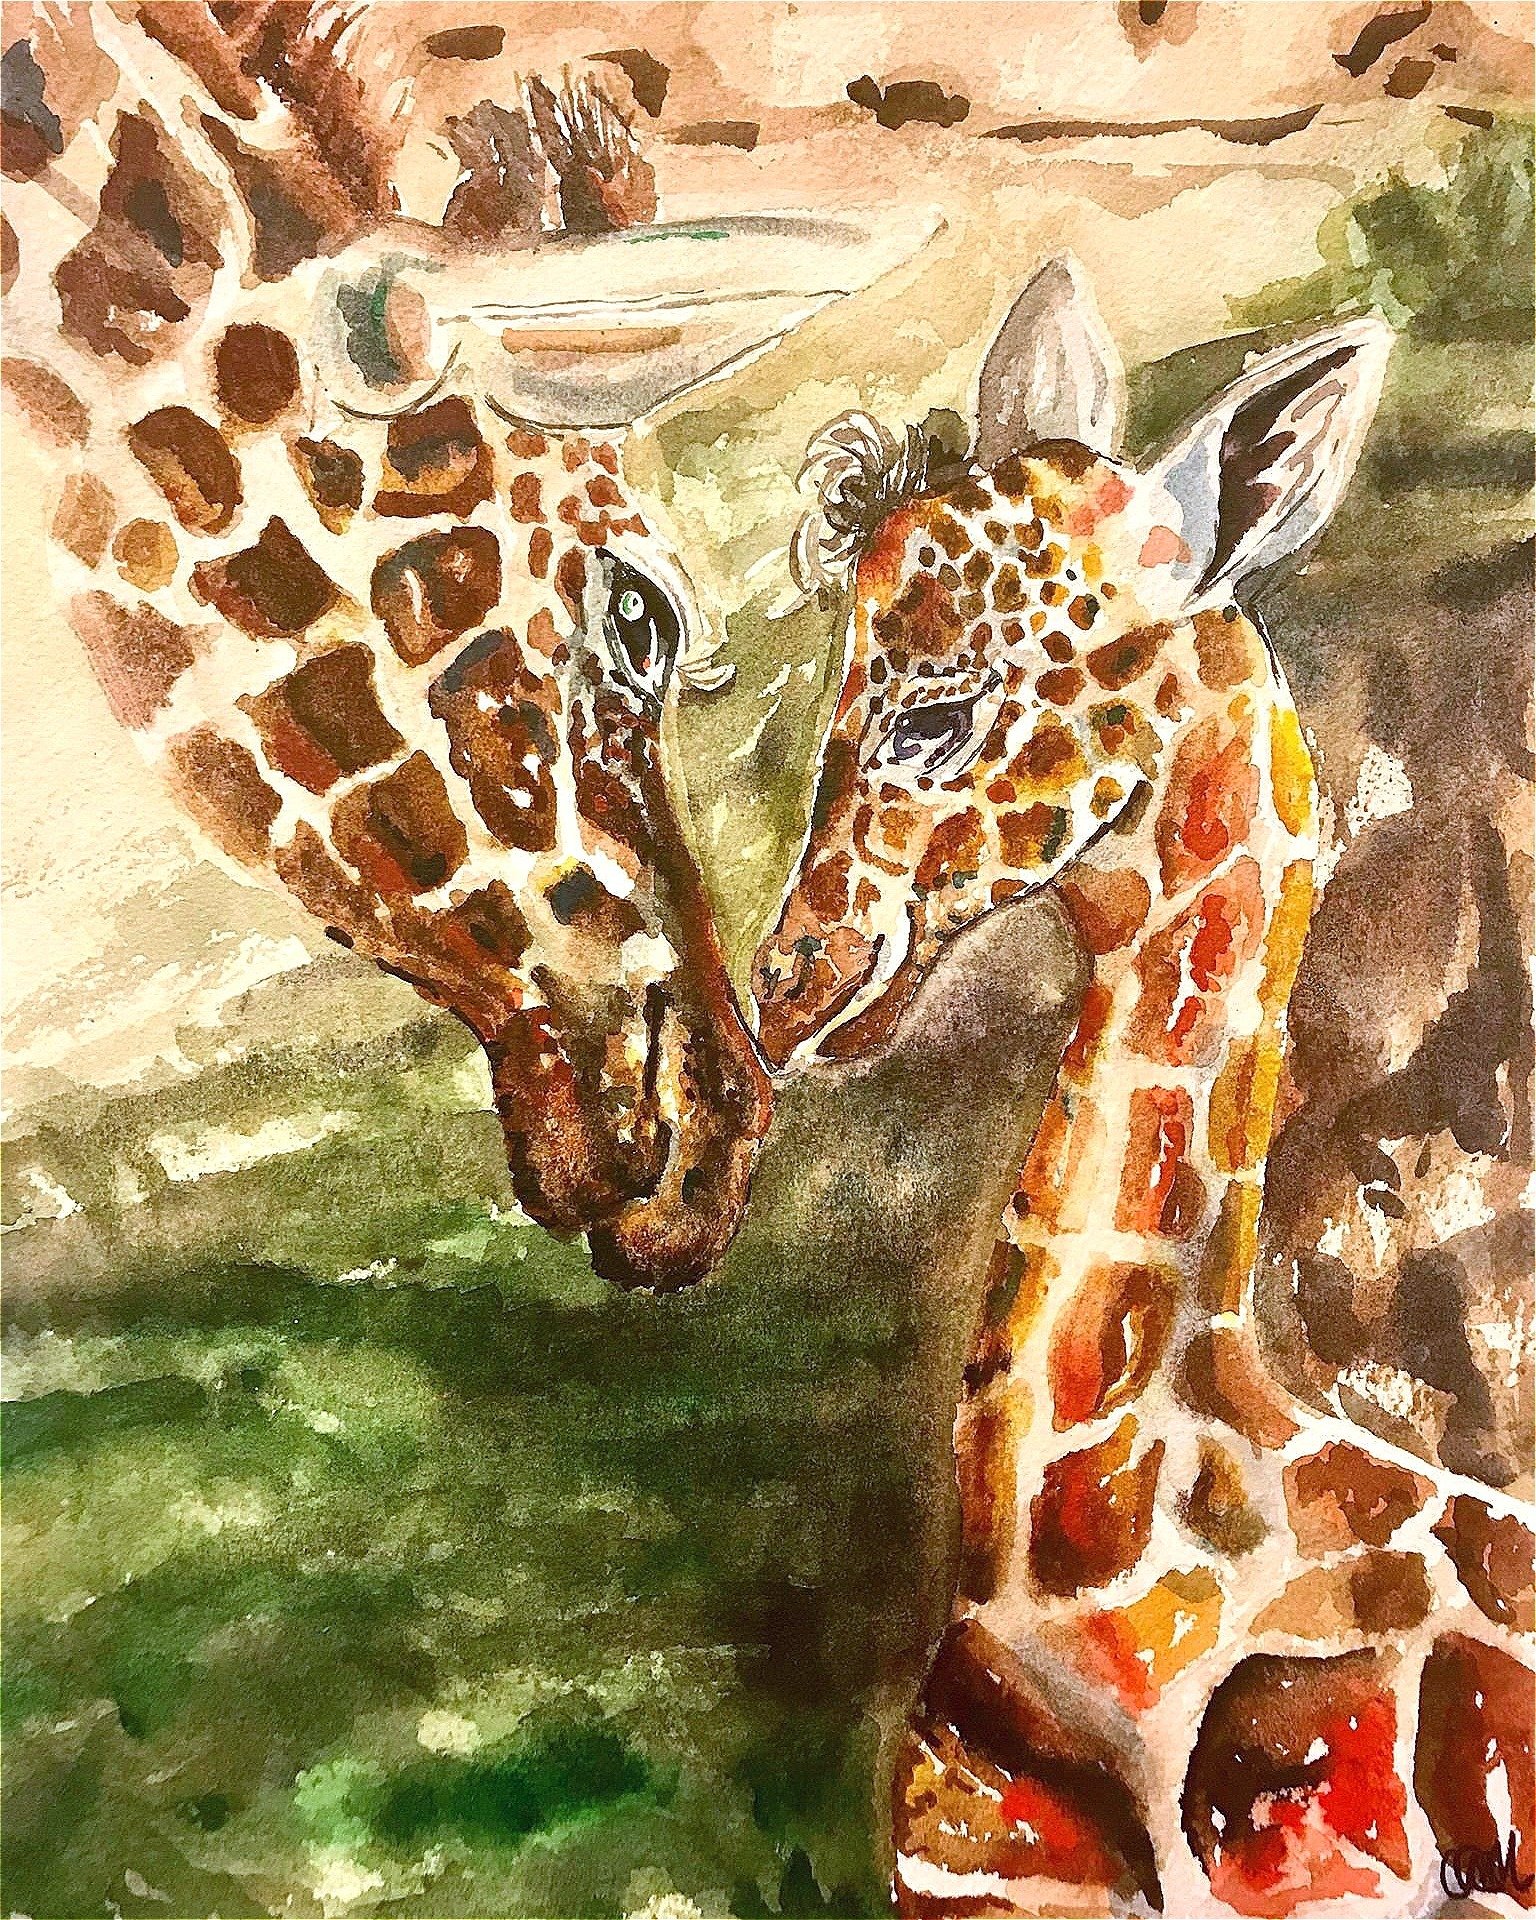 Momma and Baby Giraffe's